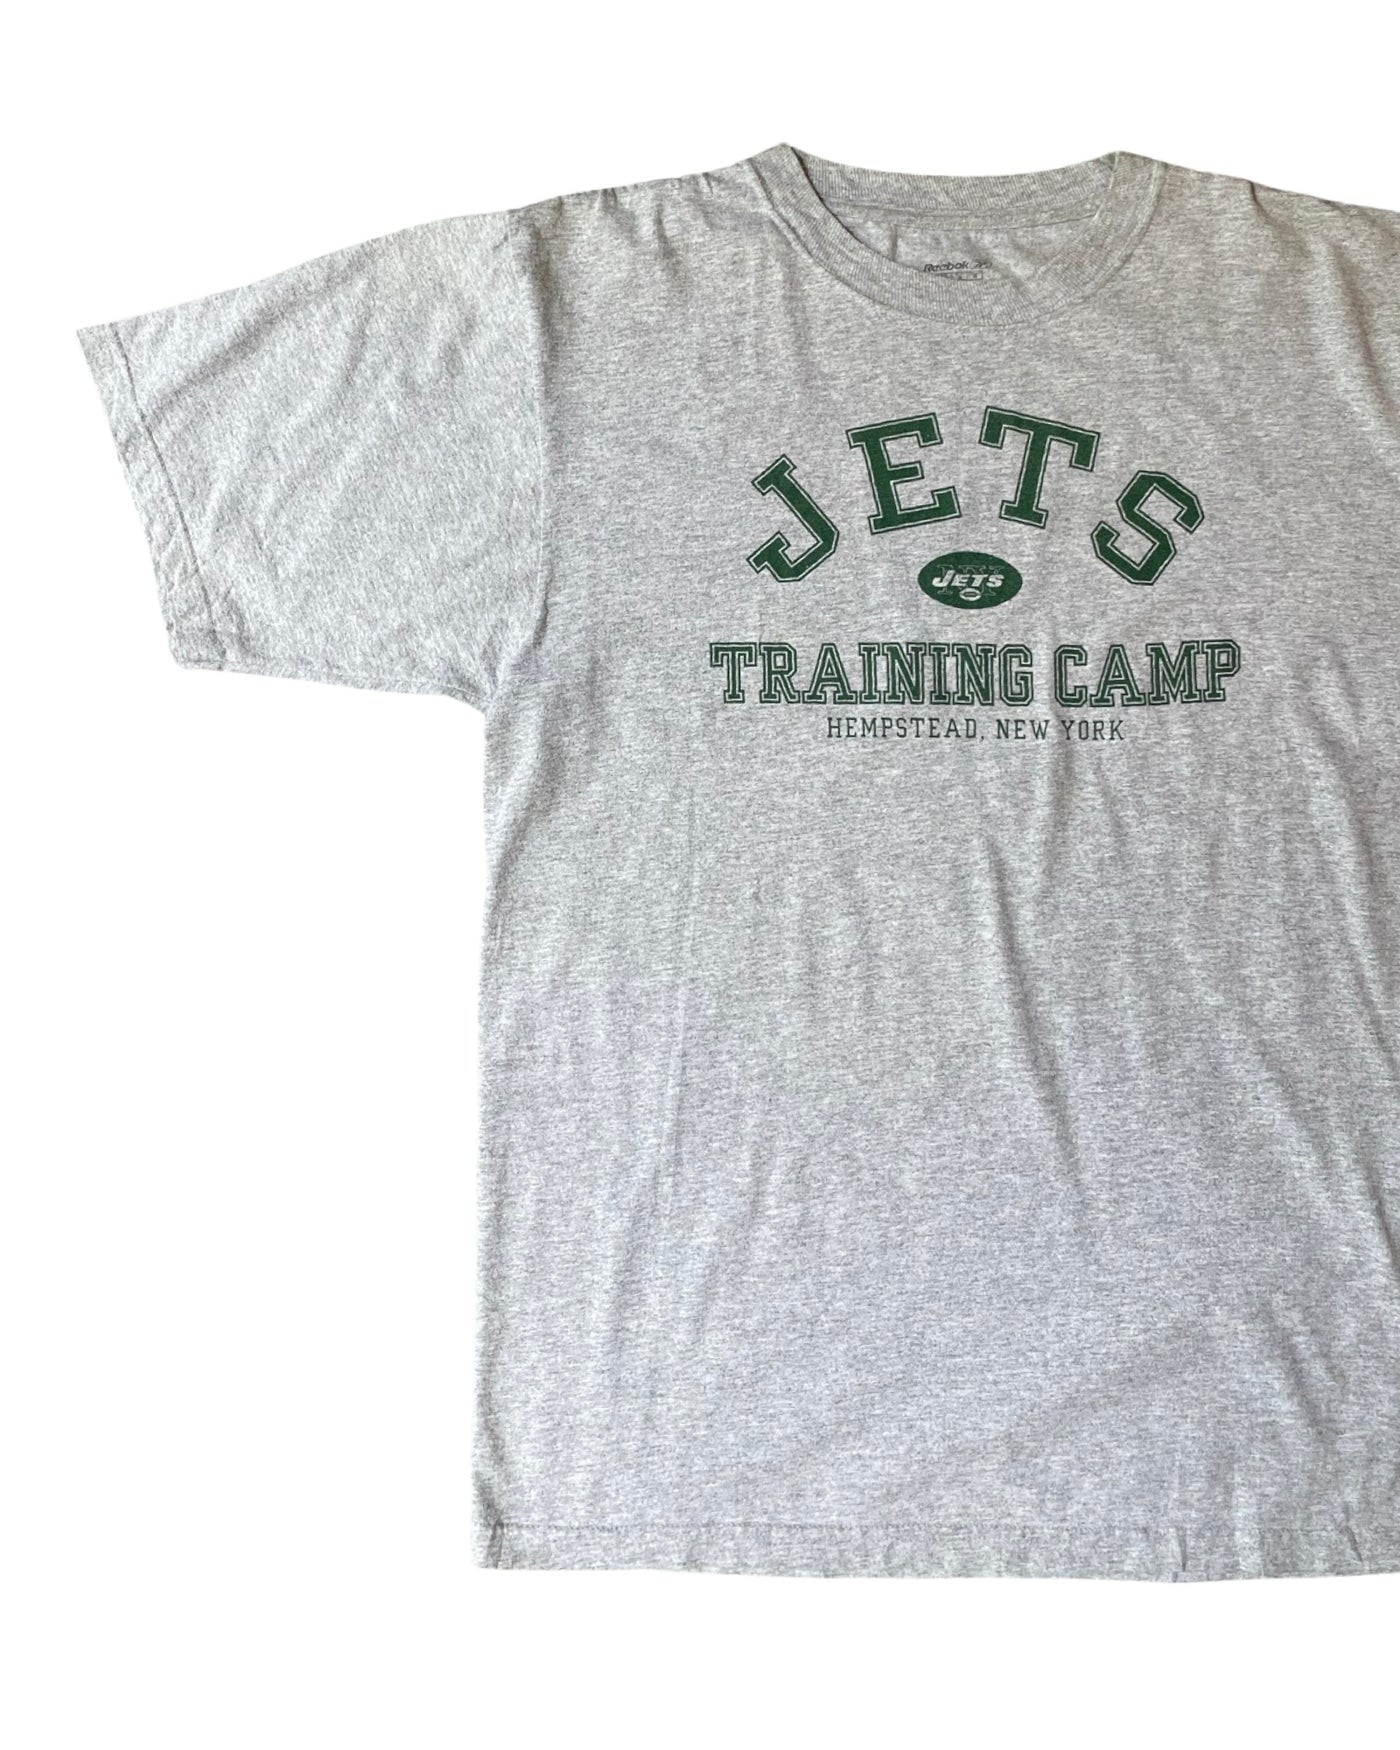 Vintage NFL New York Jets T-Shirt Size M